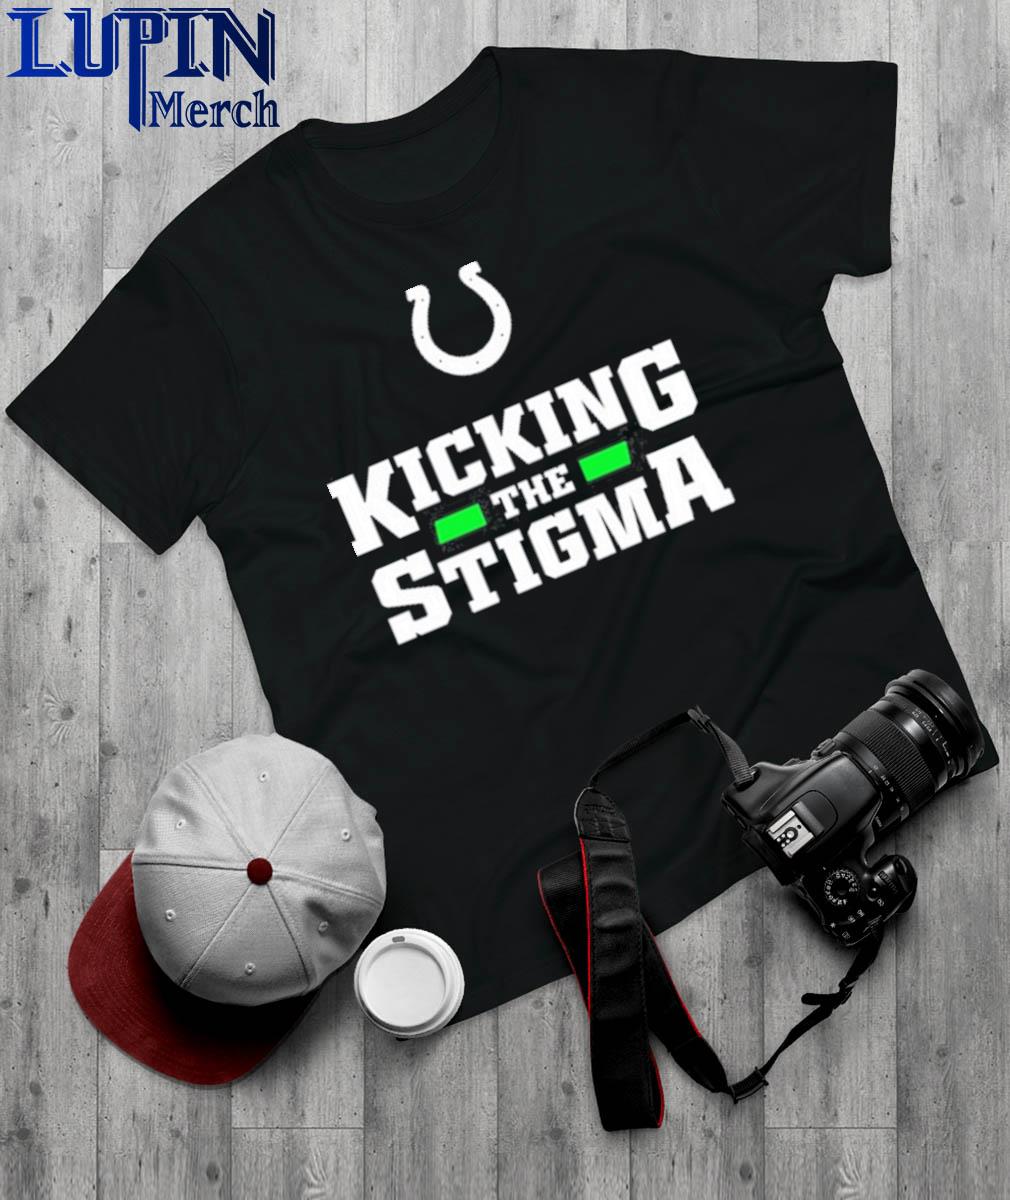 colts kicking the stigma t shirt